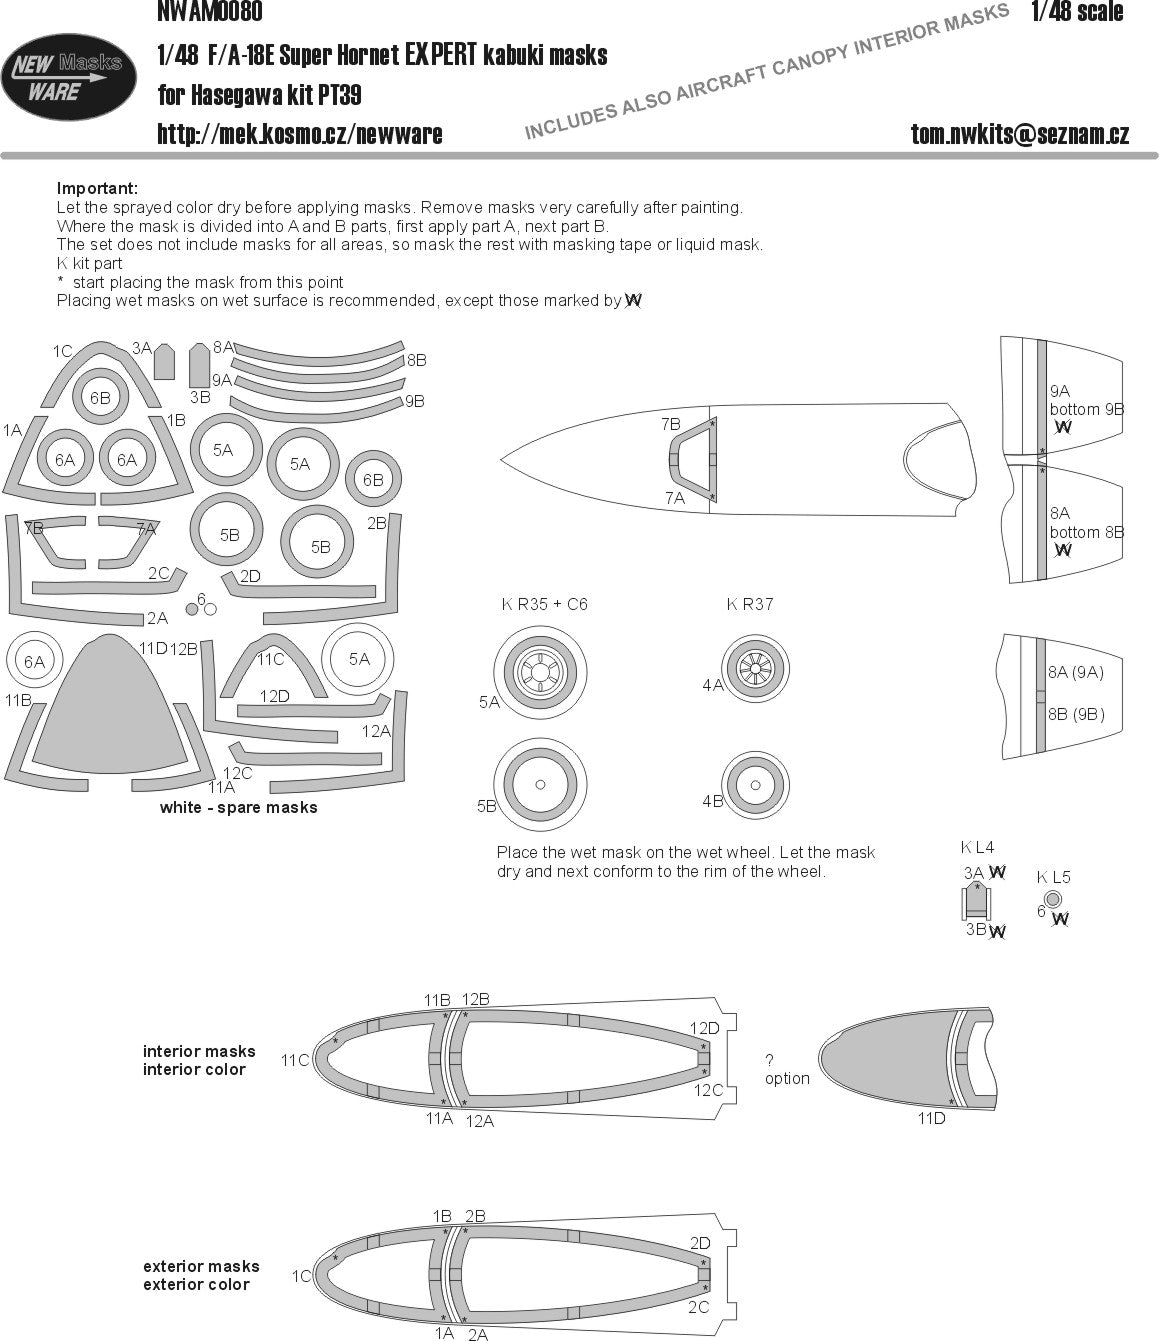 New Ware 0080 - Masking set for Hasegawa 1/48 F/A-18E  Super Hornet EXPERT